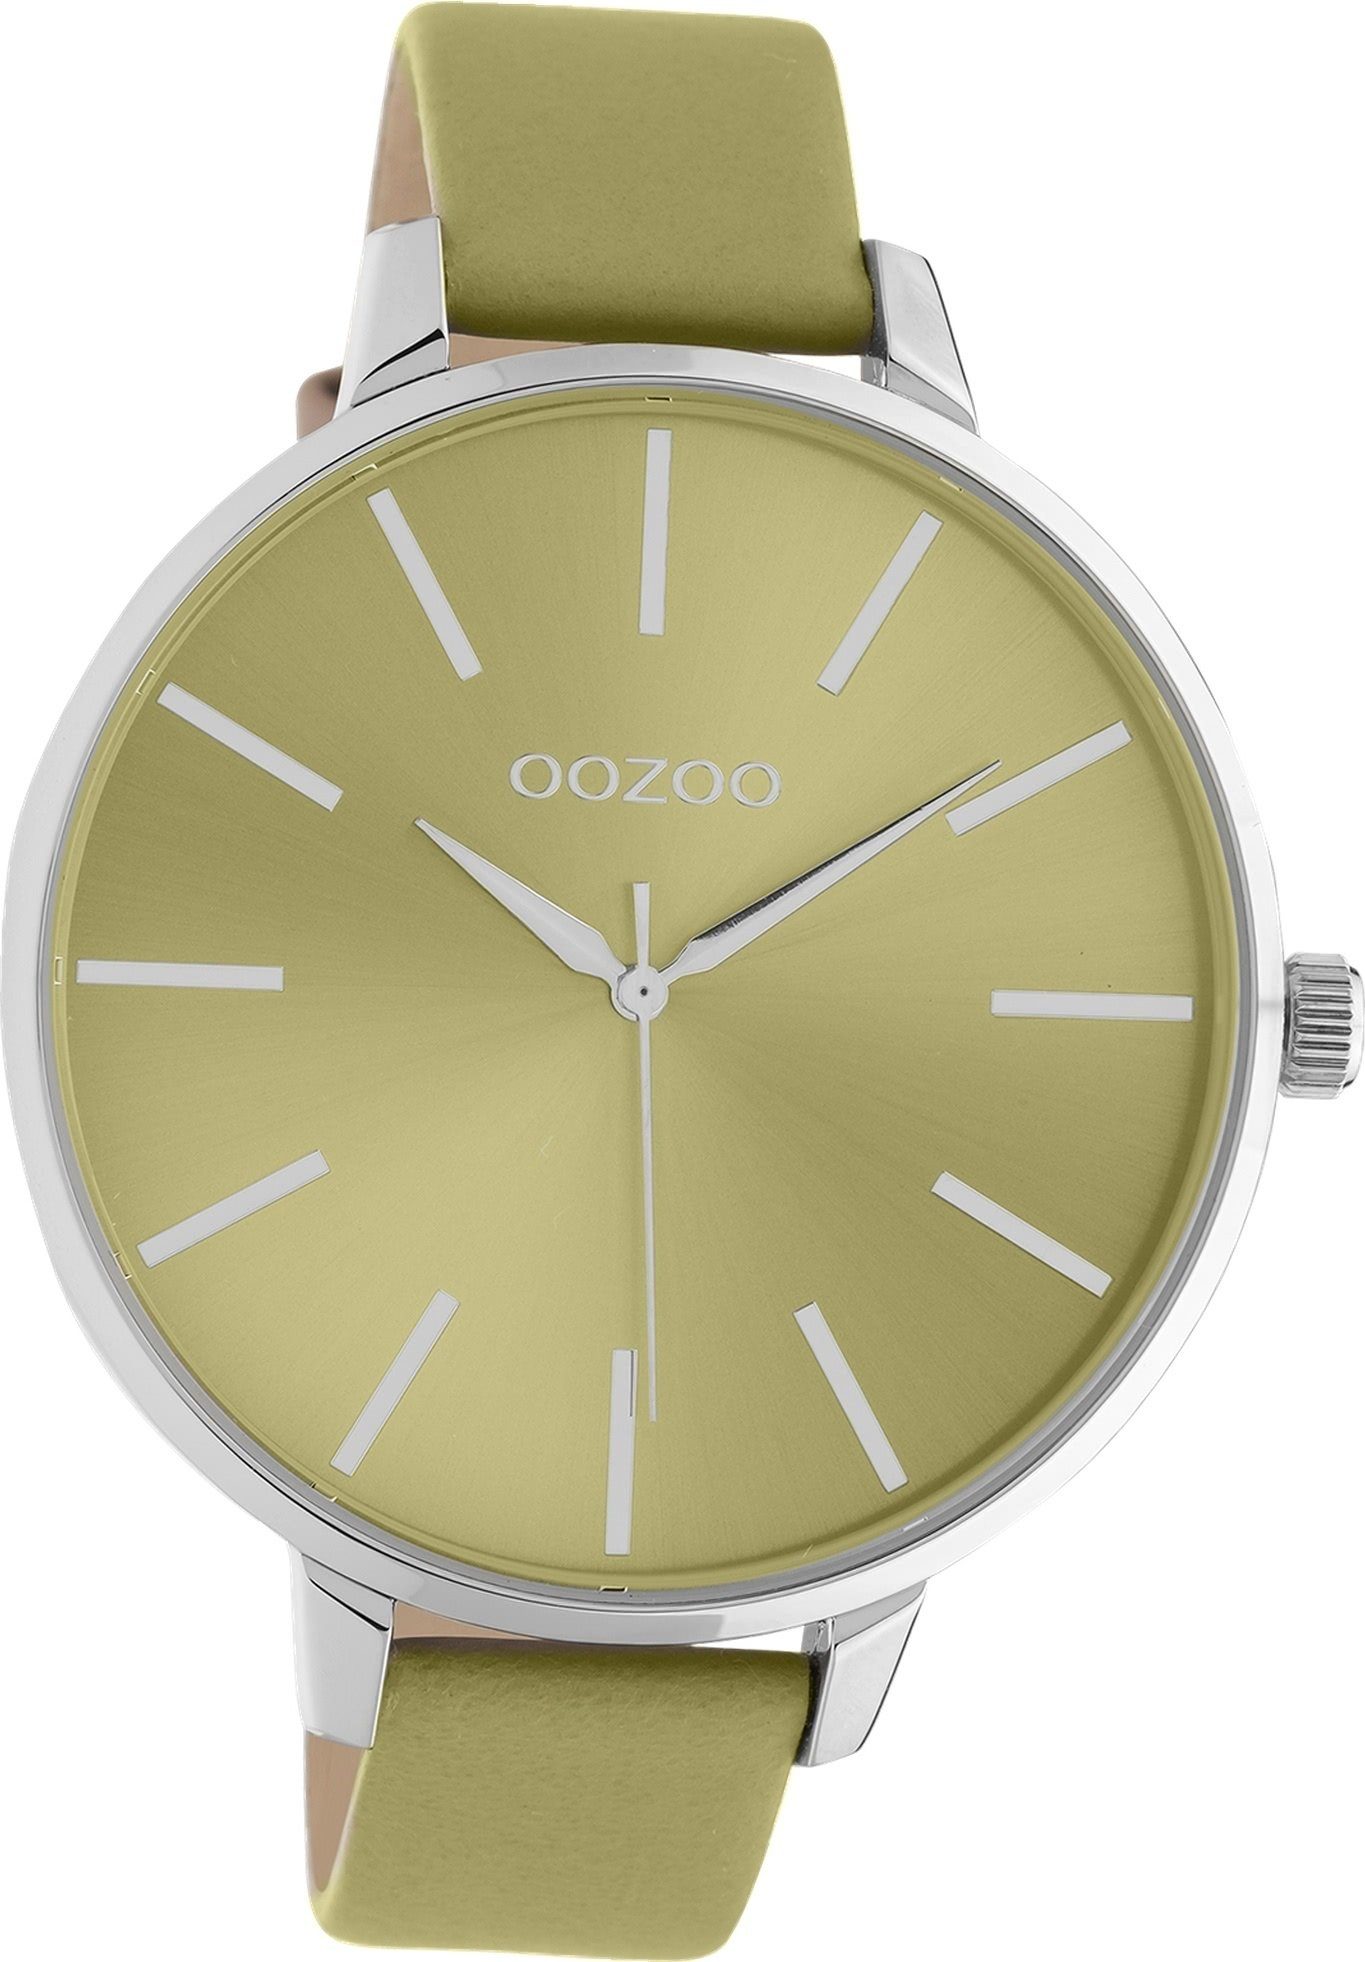 OOZOO Quarzuhr Damenuhr rundes 48mm) ockergelb, Oozoo extra (ca. Armbanduhr Lederarmband Damen Gehäuse, Timepieces, groß